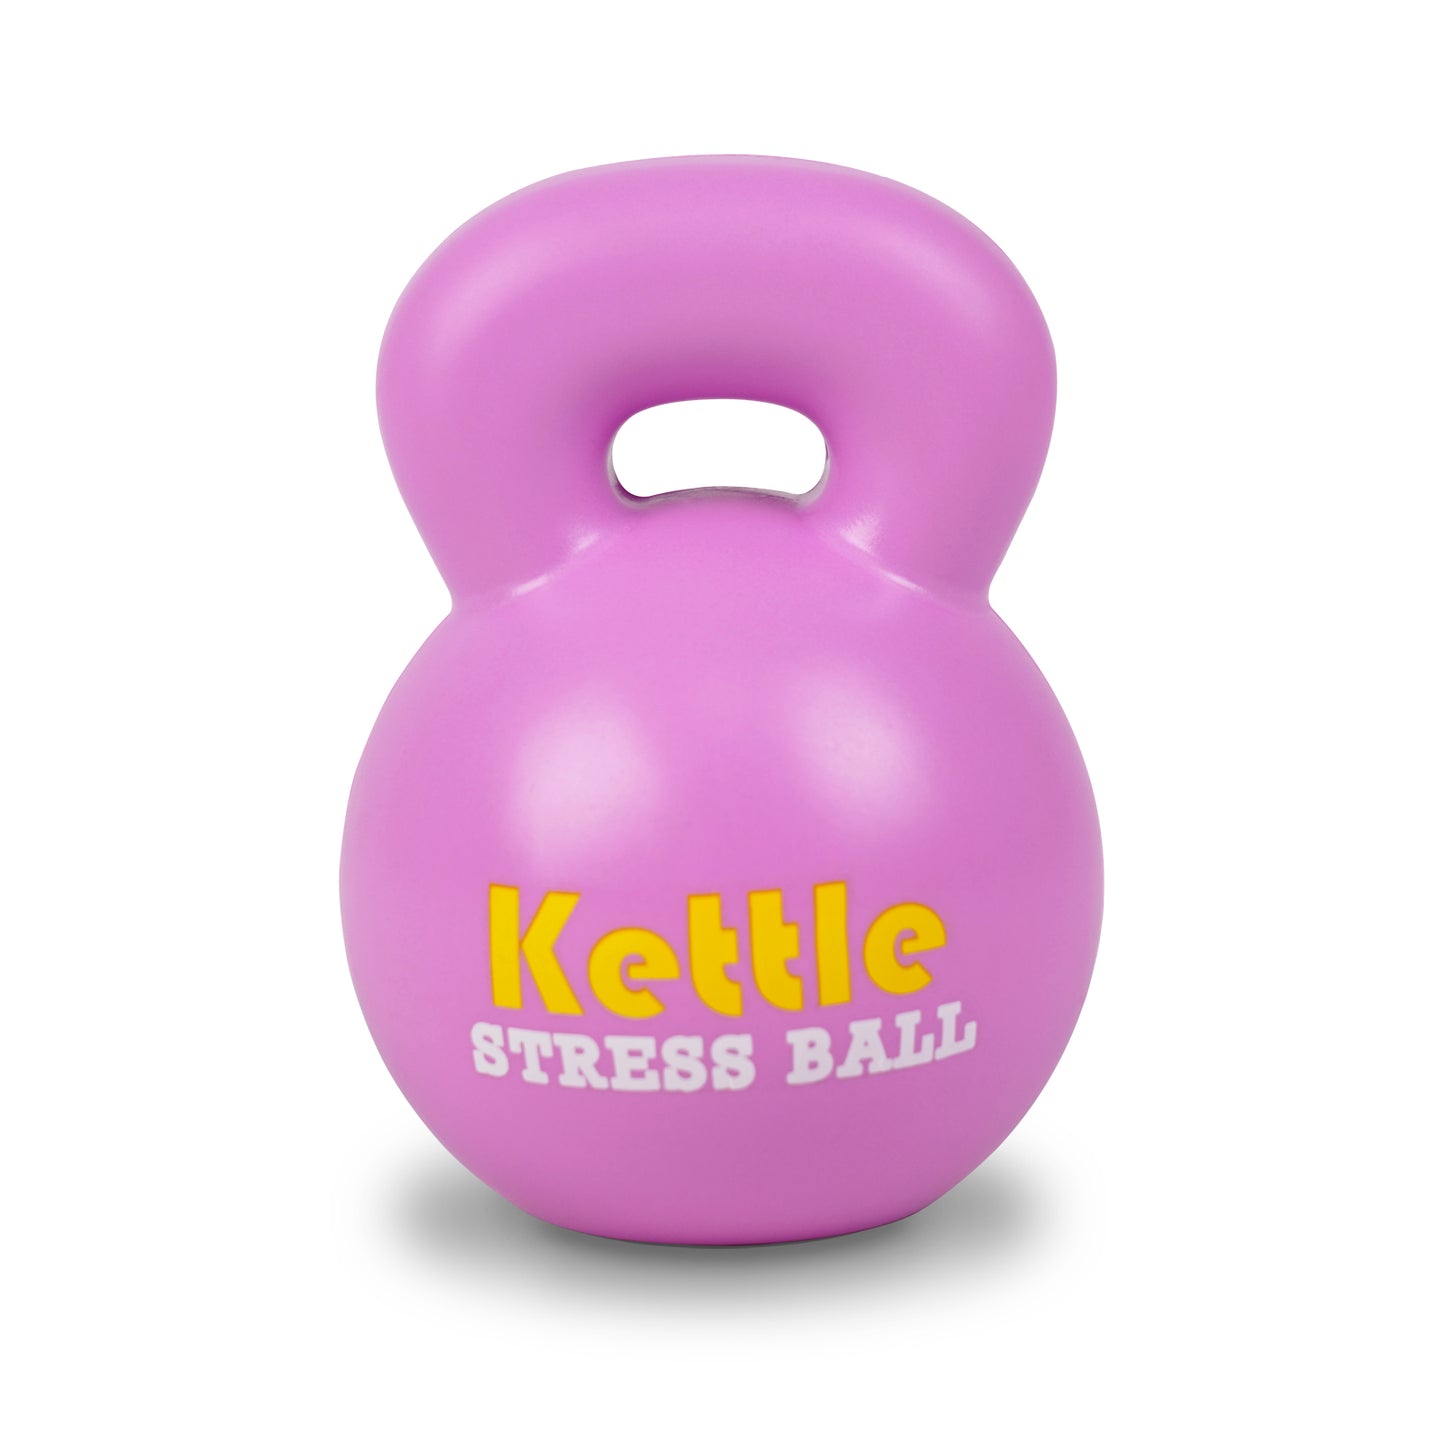 YOBRO Mini Kettle Stress Ball Pink WSG11268